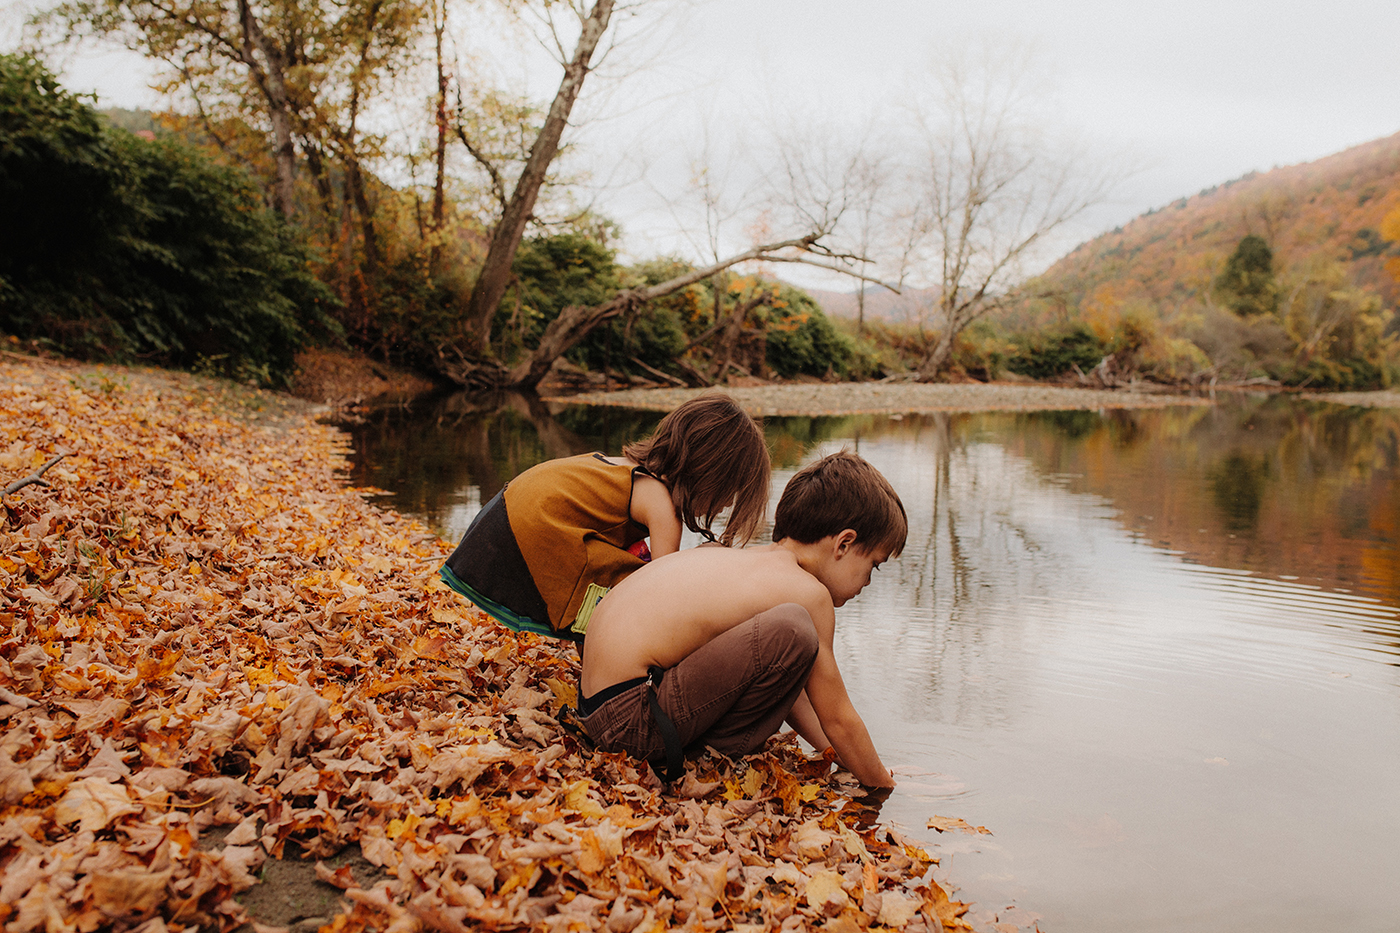 vermont-children-family-portraits-river-autumn-siblings.jpg